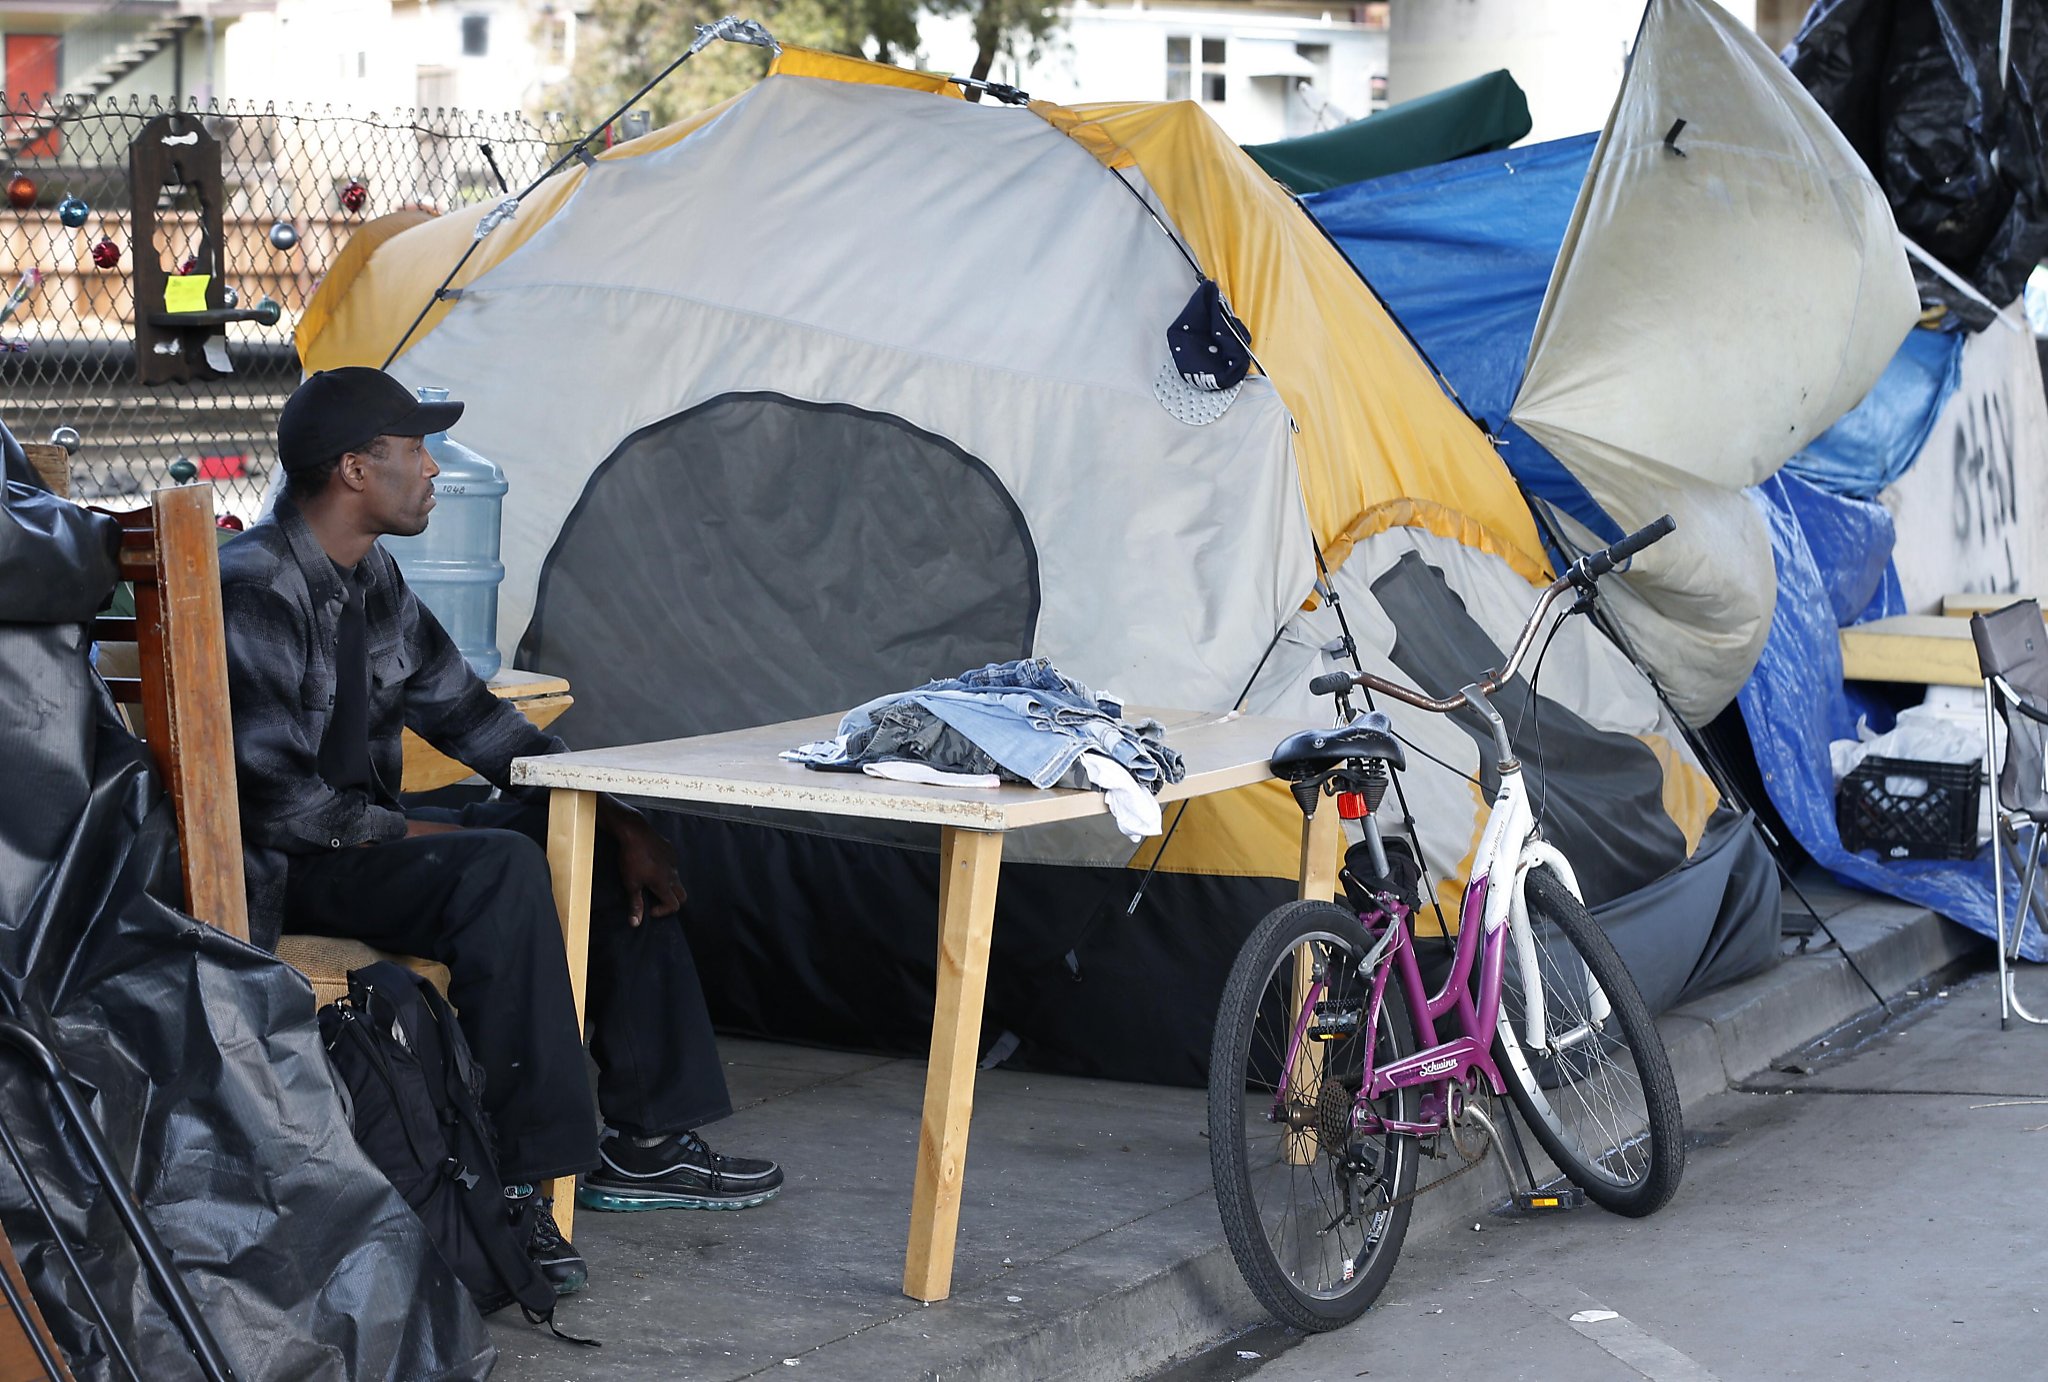 Oakland's latest fire hazard: homeless camps - San Francisco Chronicle